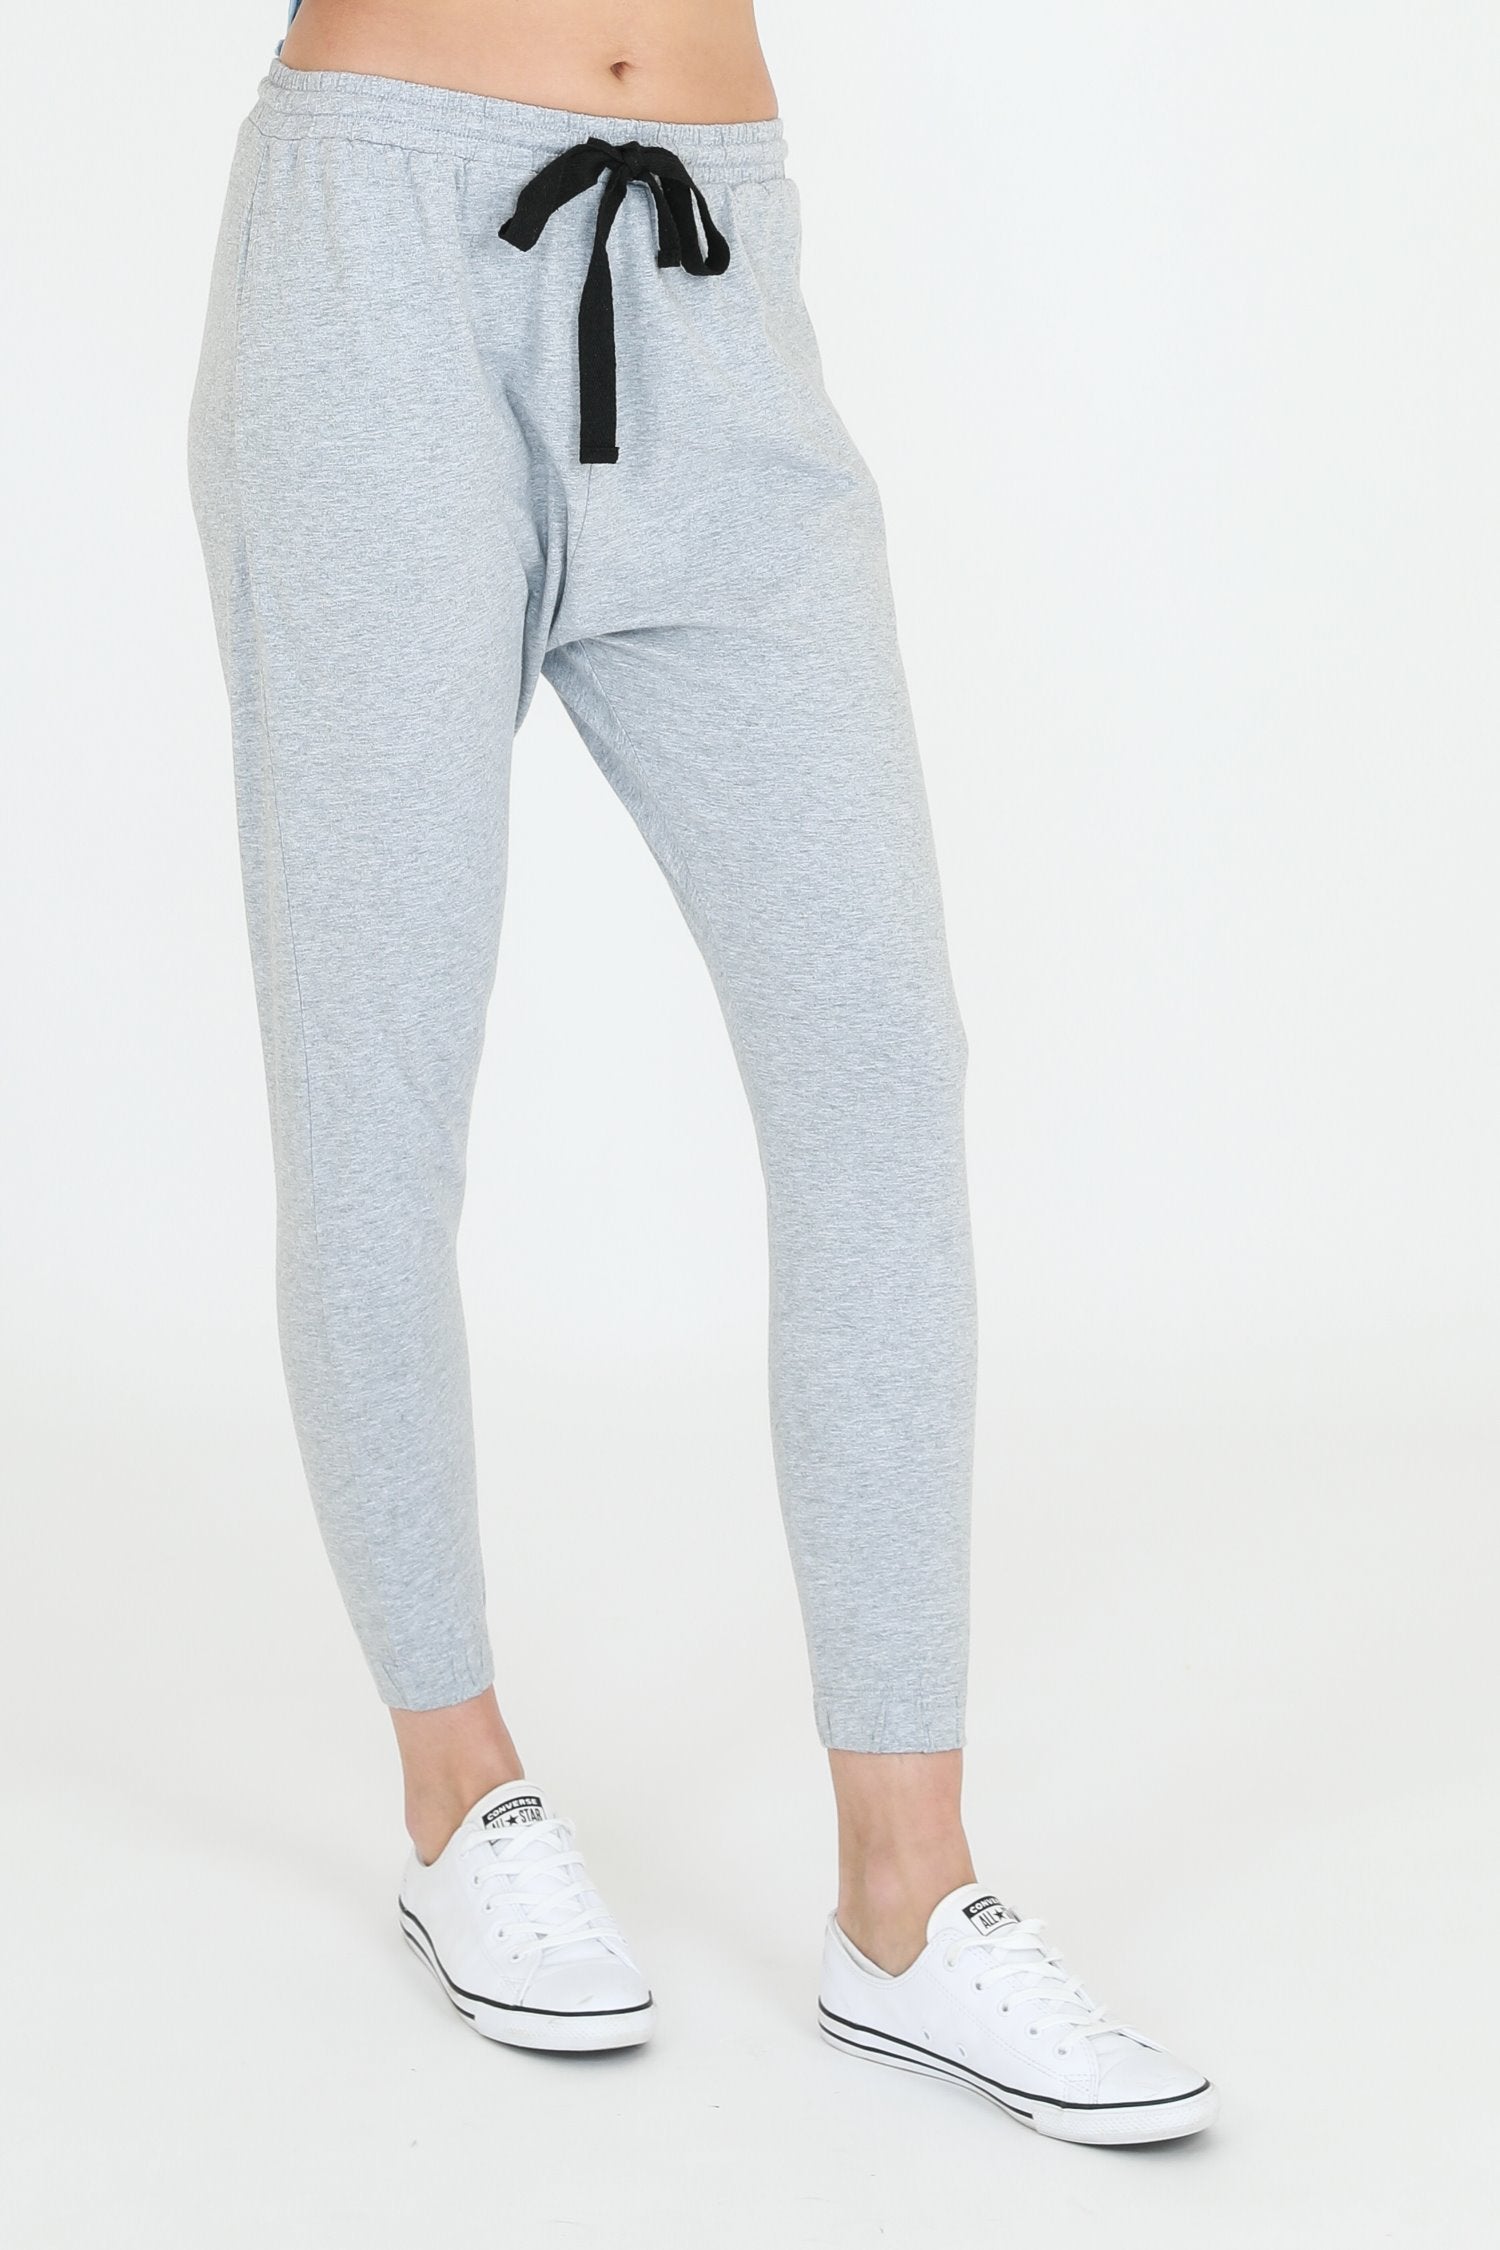 lighweight jogger pants women's #color_grey marle